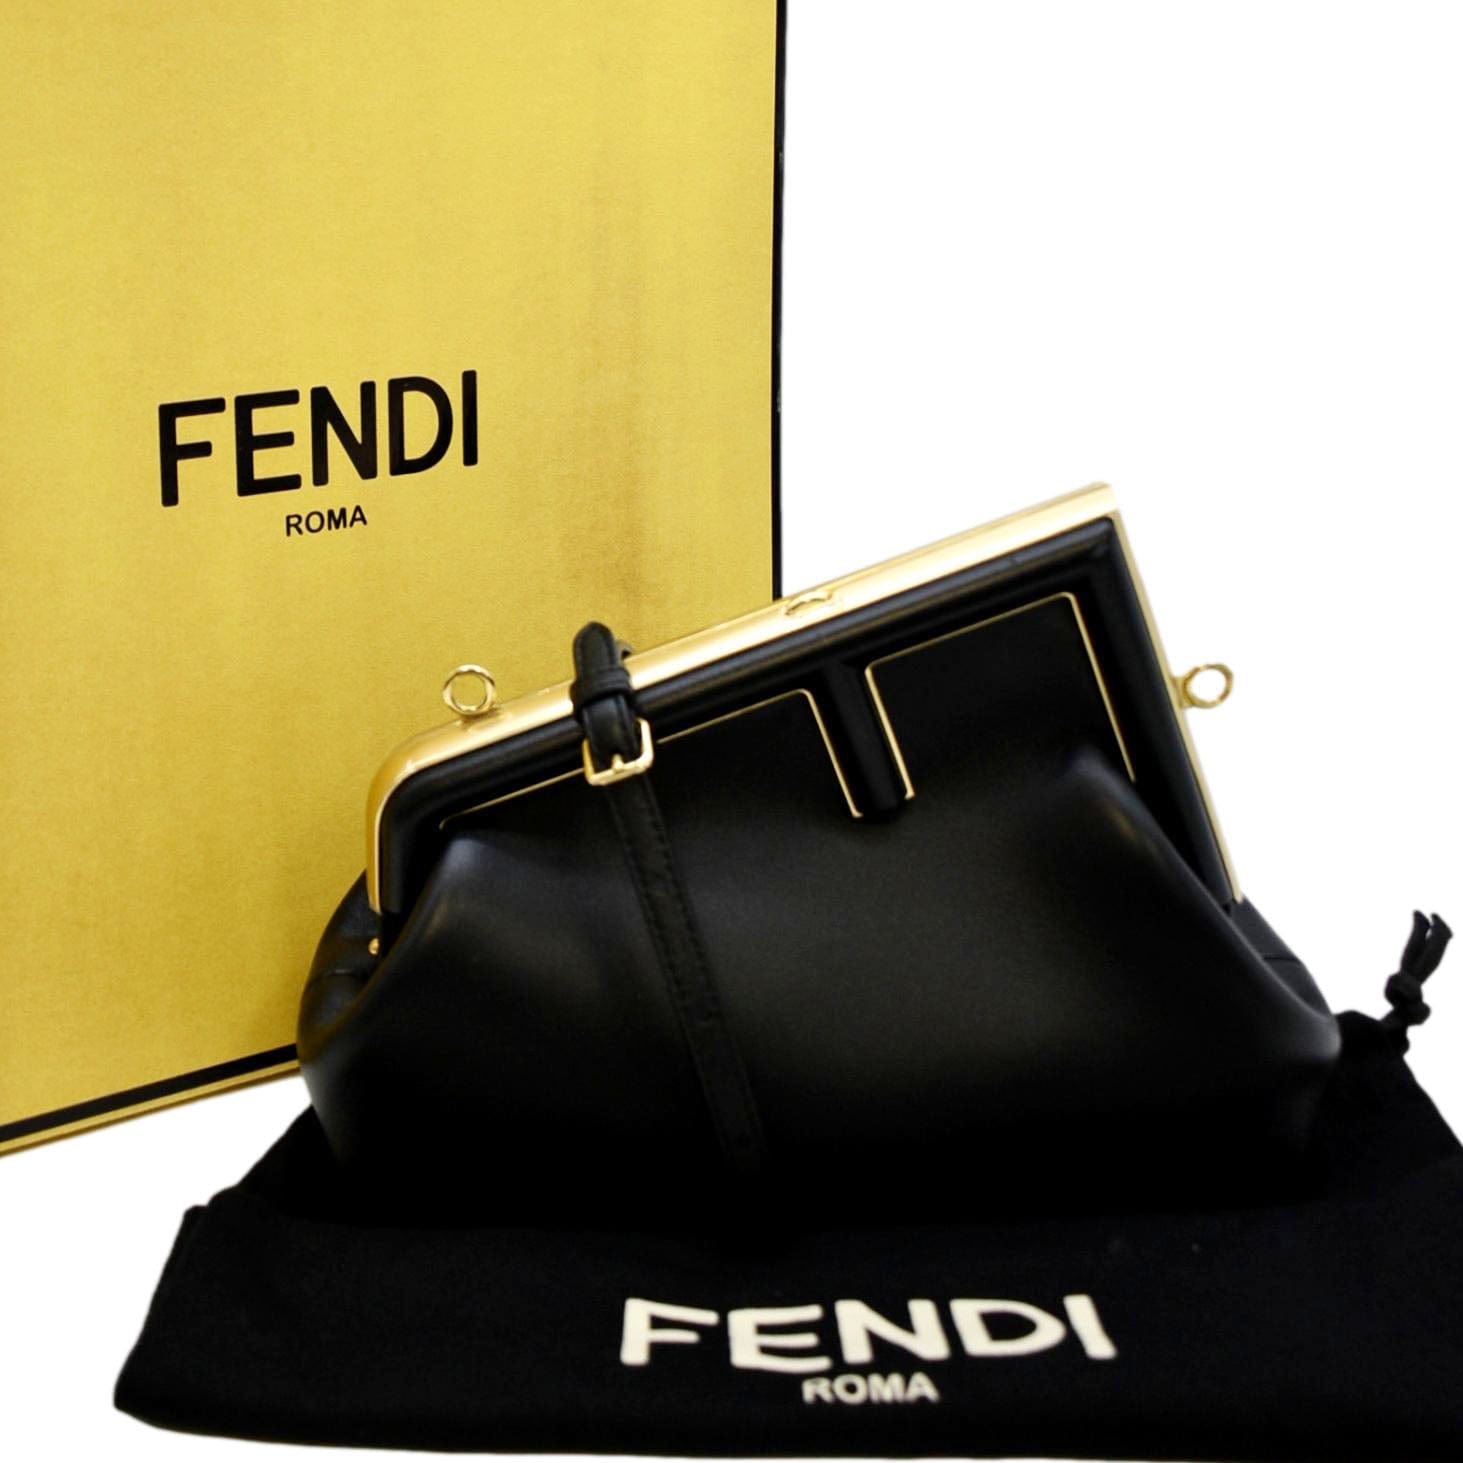 Fendi First Leather Clutch